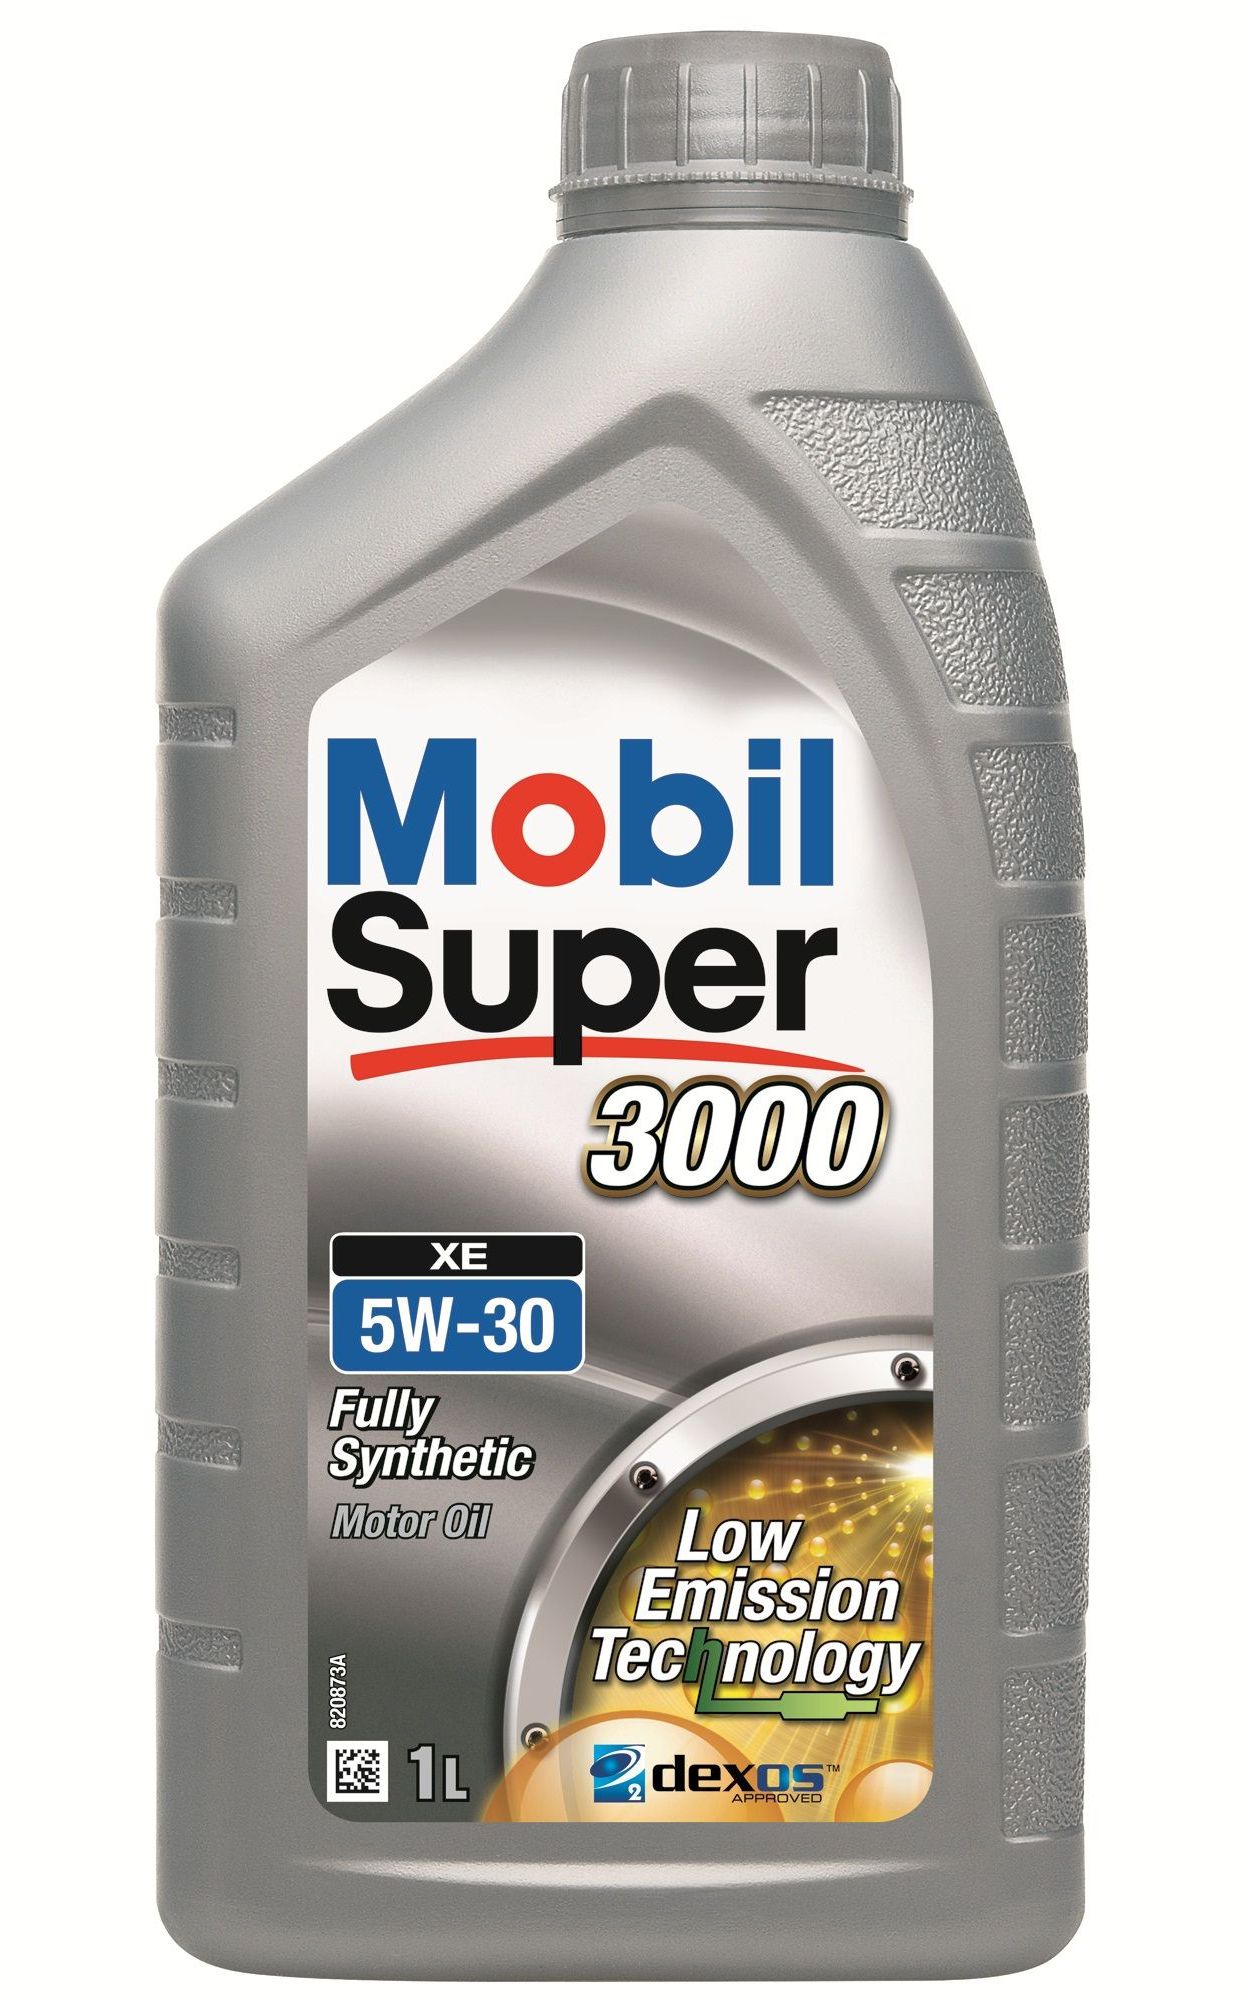 OLEJ MOBIL SUPER 3000 XE 5W-30 1L Dexos2